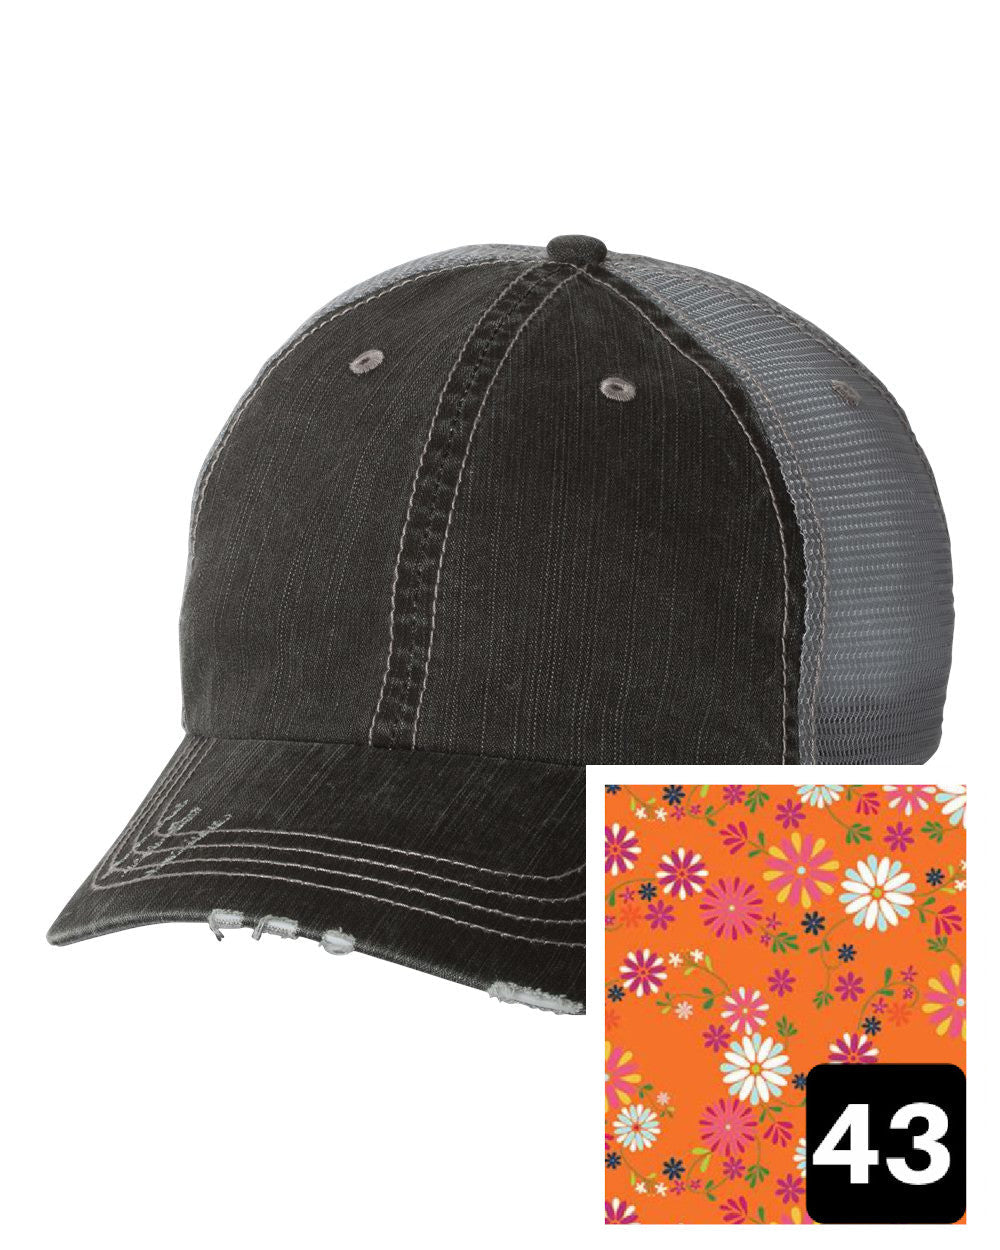 gray distressed trucker hat with black geometric fabric state of Massachusetts